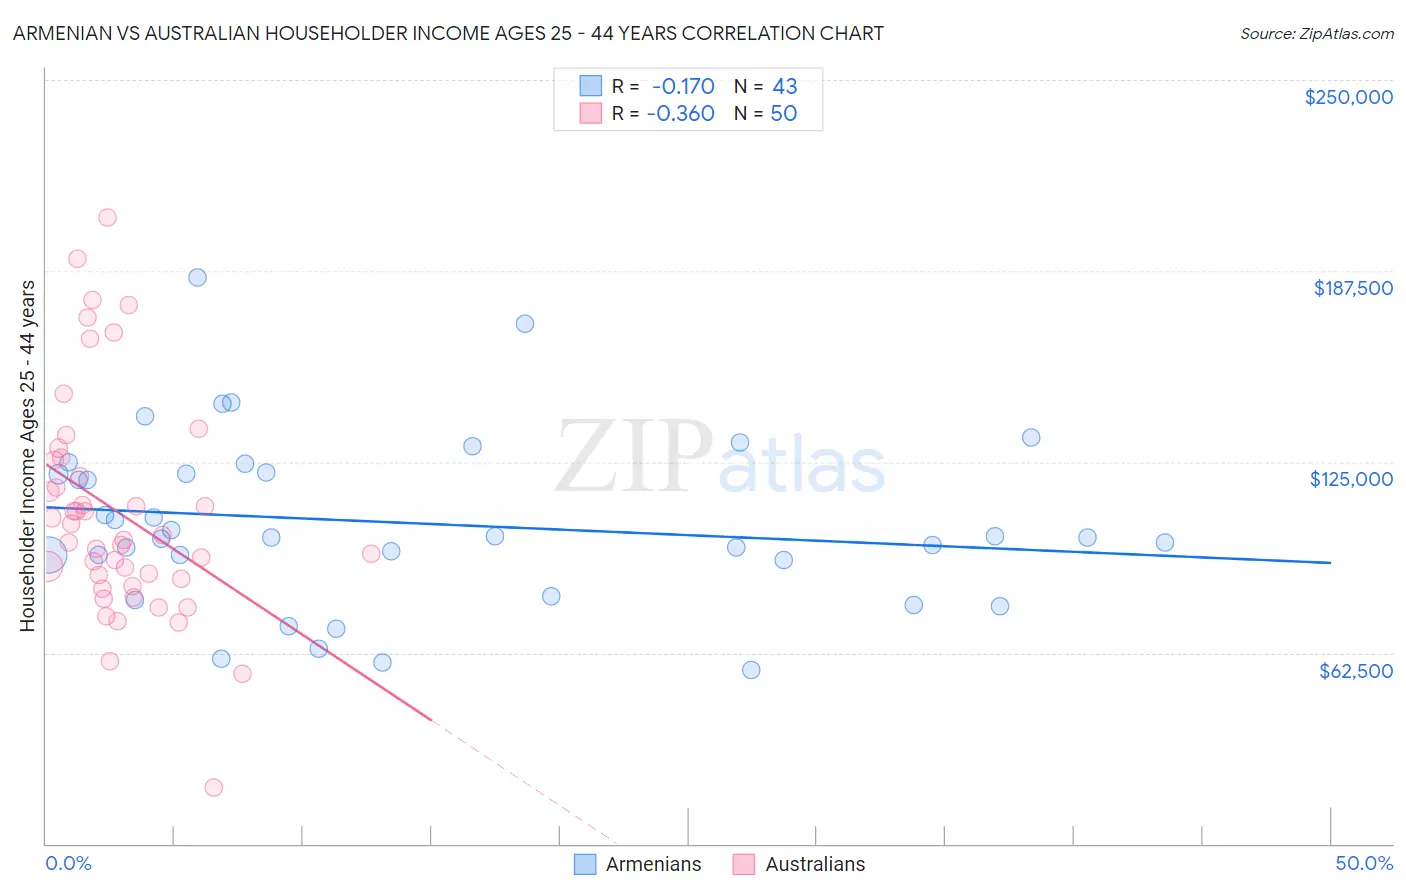 Armenian vs Australian Householder Income Ages 25 - 44 years